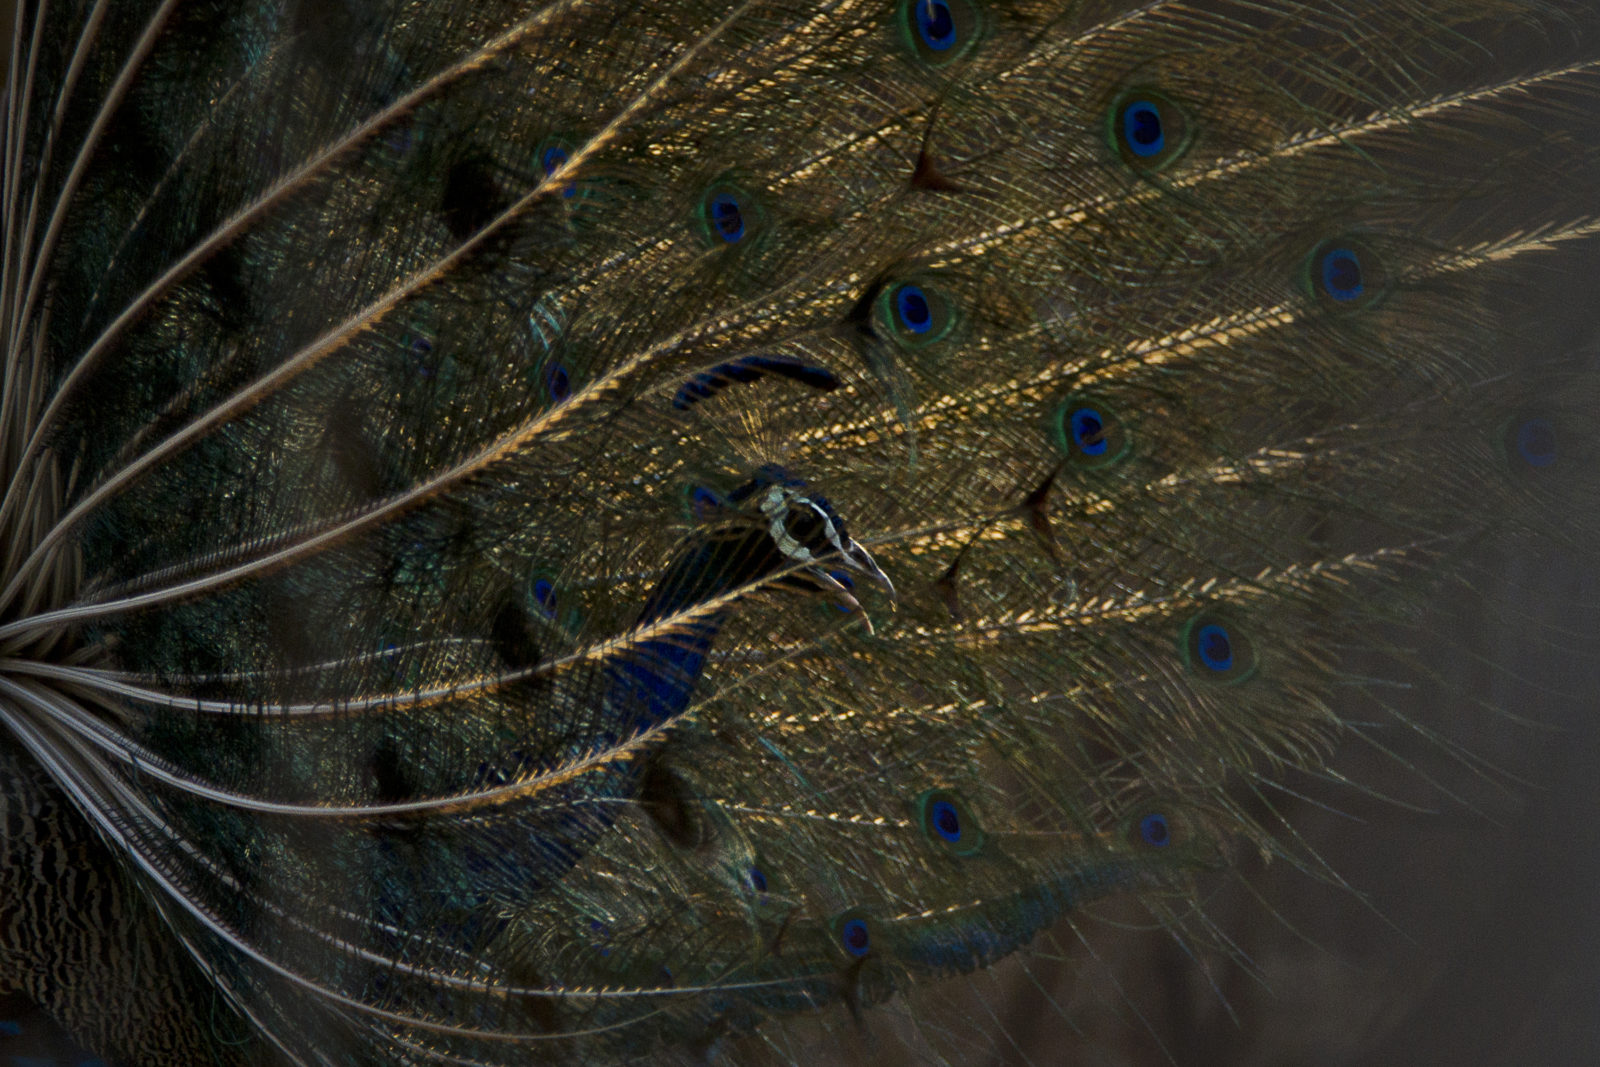 Peacock (Photo by Nitish Bindal)